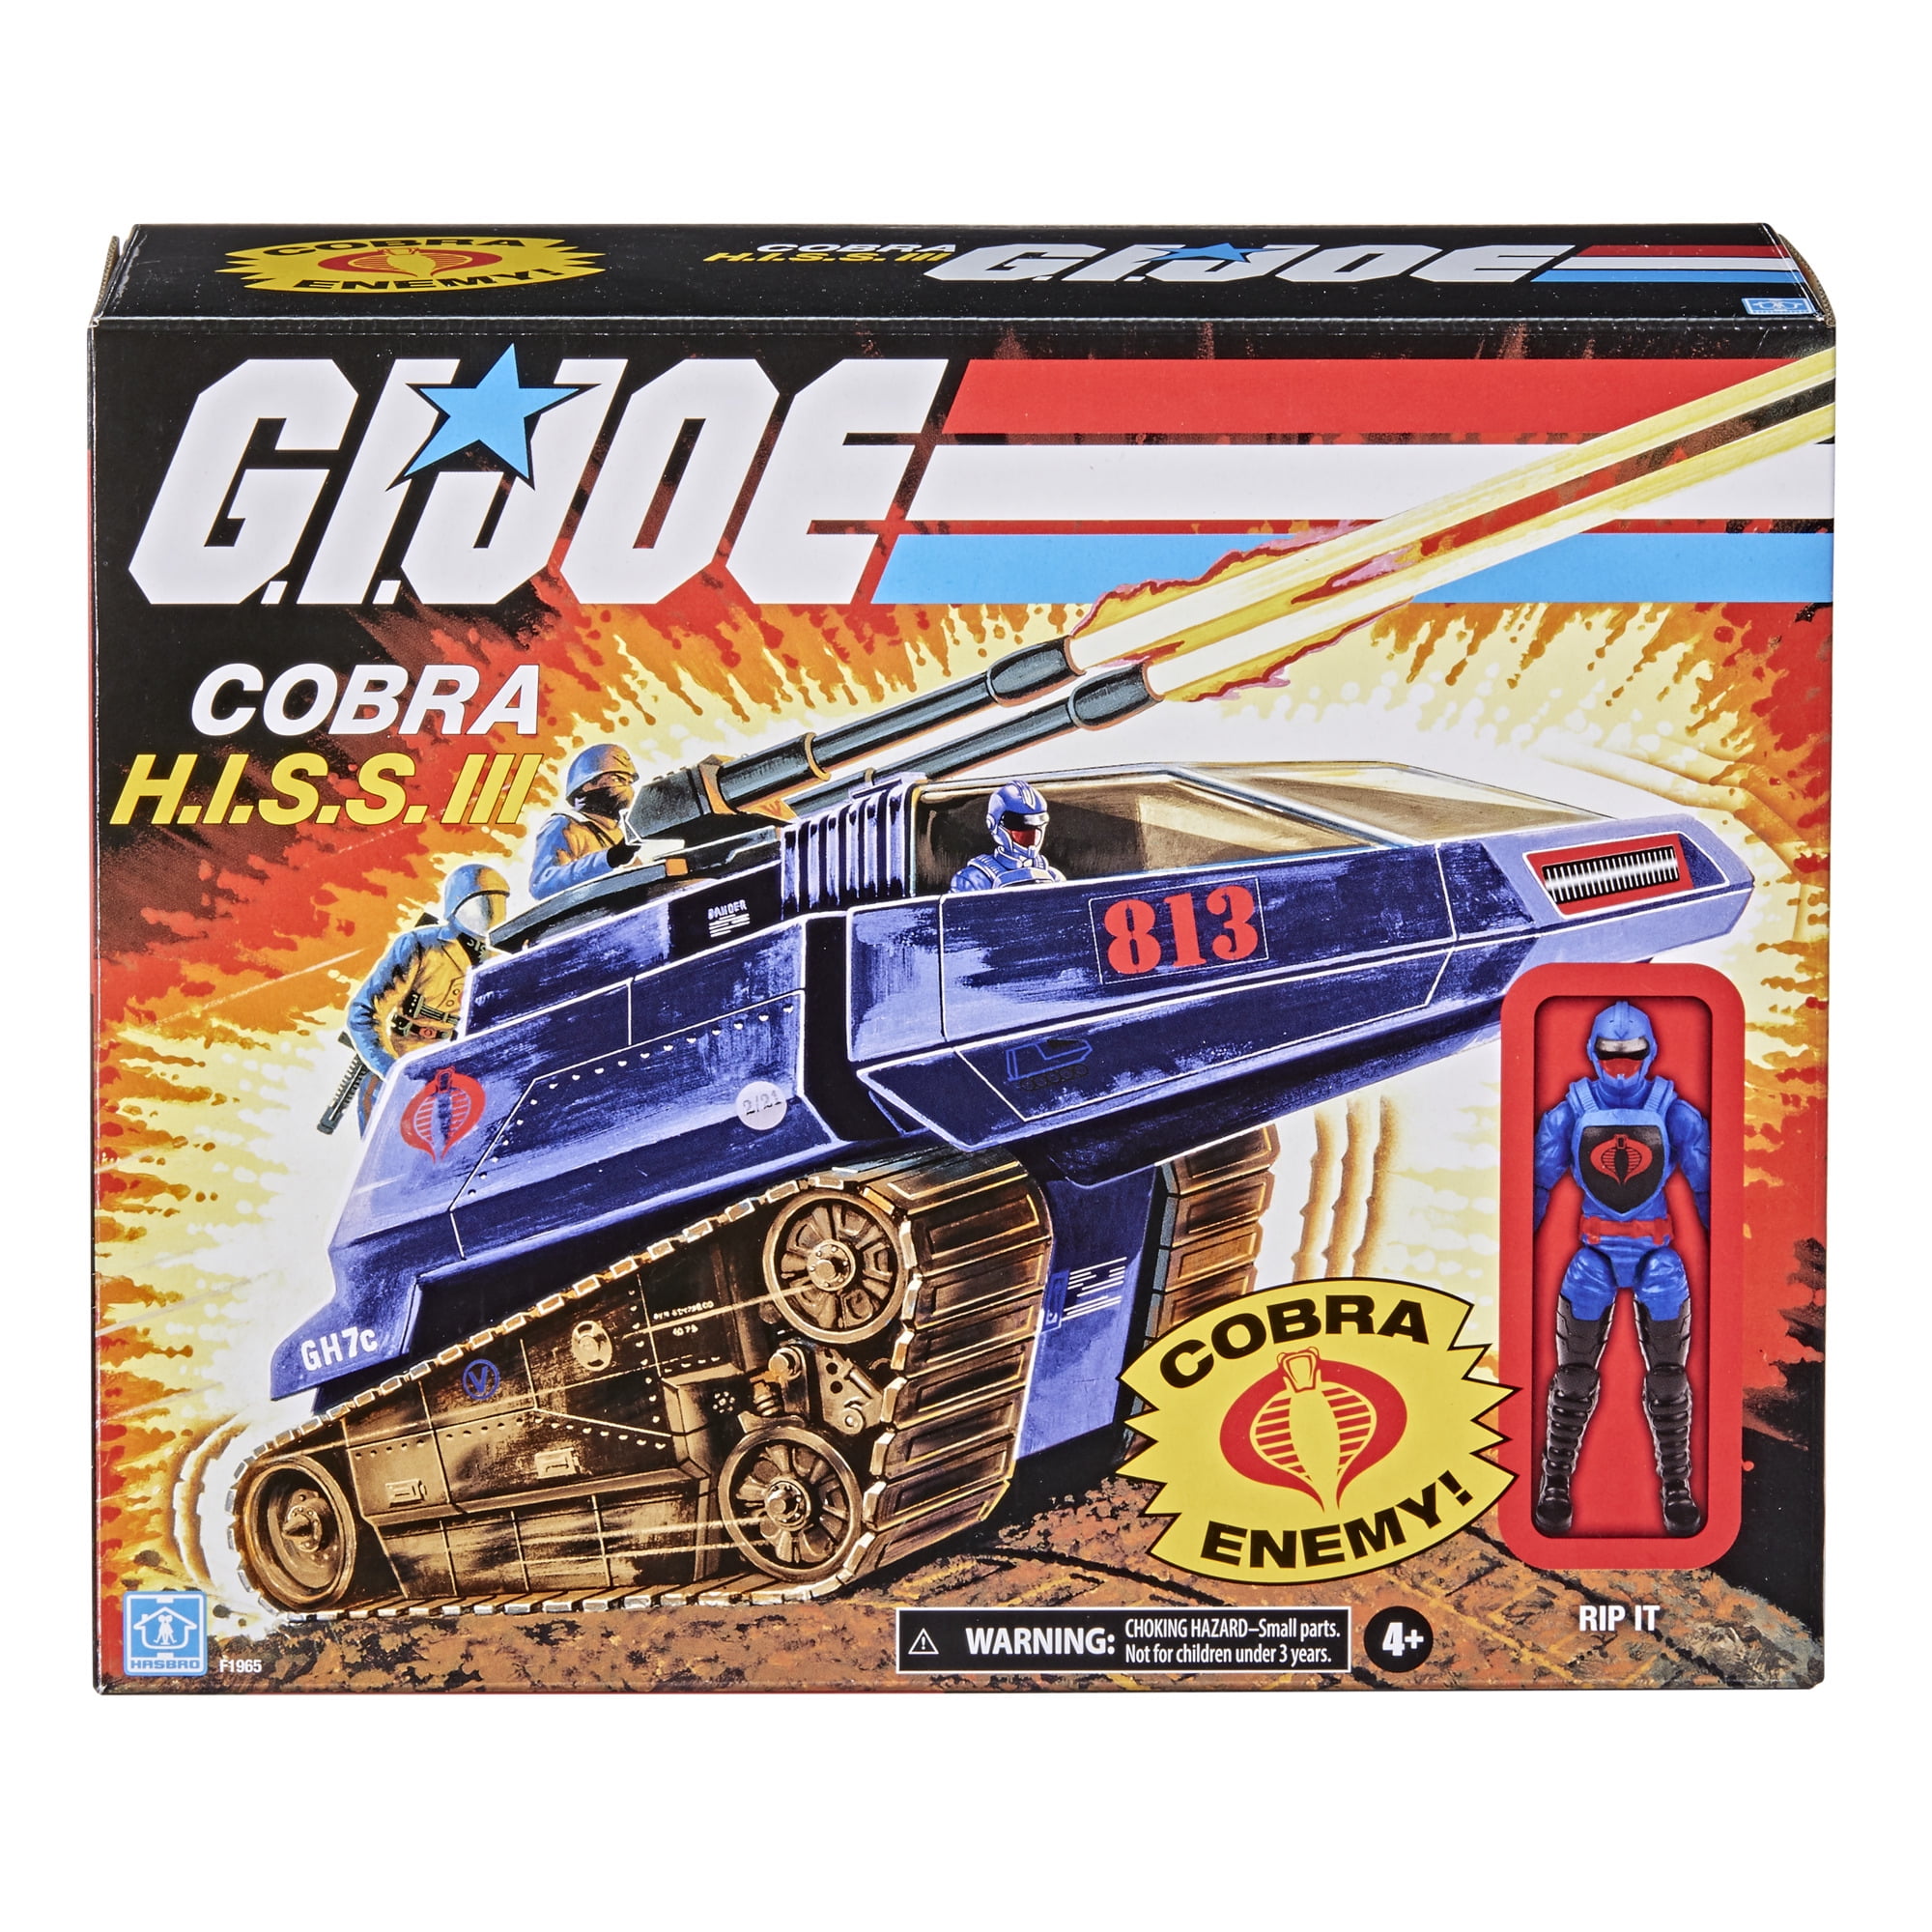 Walmart Exclusive-Retro G.I Joe Cobra Hiss Tank-In Hand-fast shipping same day 